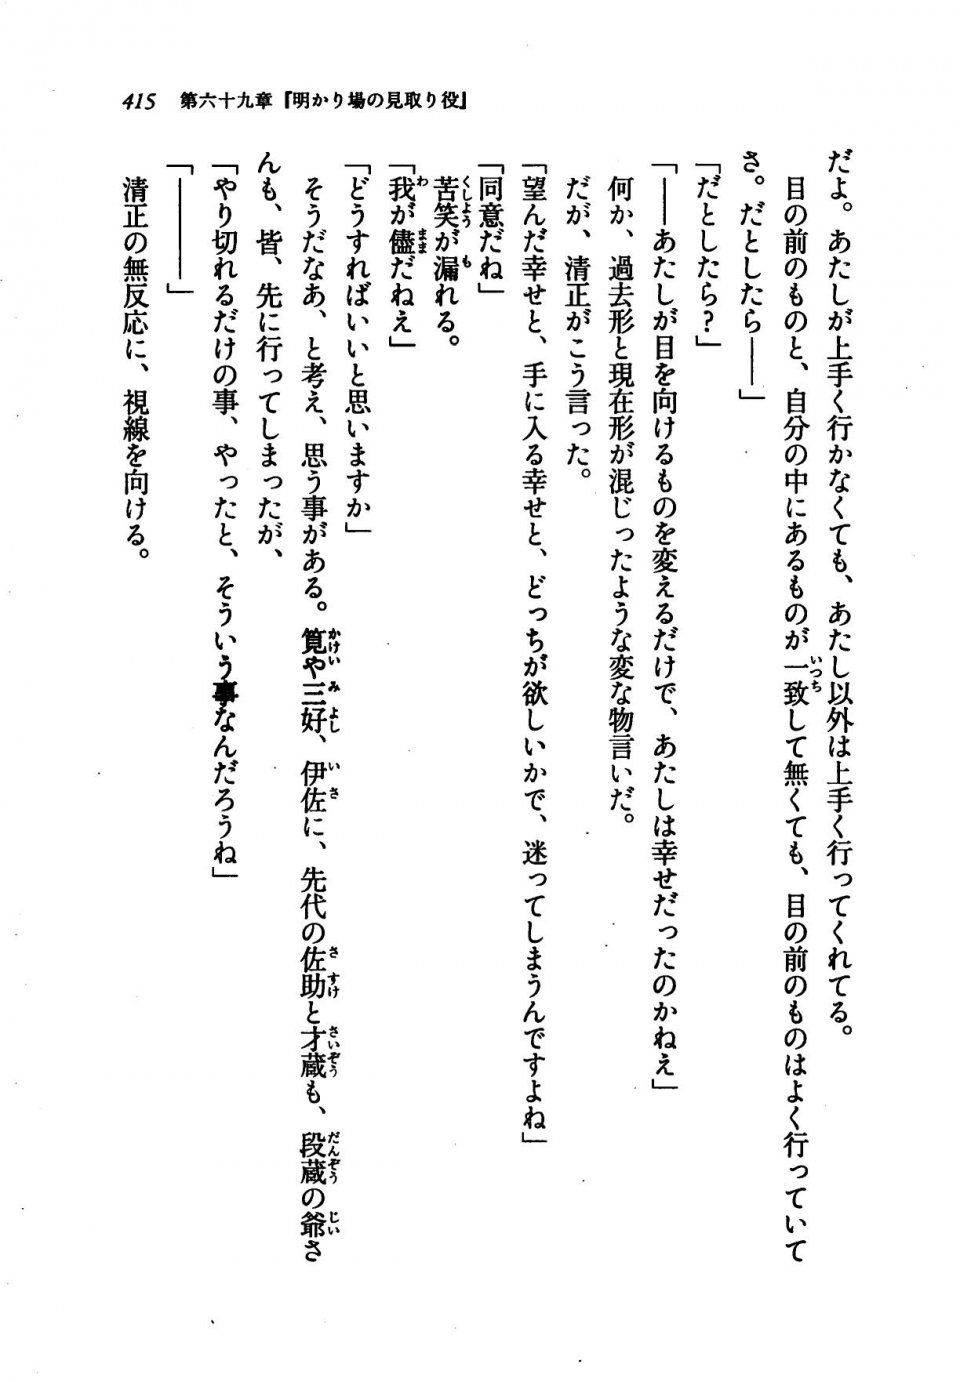 Kyoukai Senjou no Horizon LN Vol 21(8C) Part 1 - Photo #414